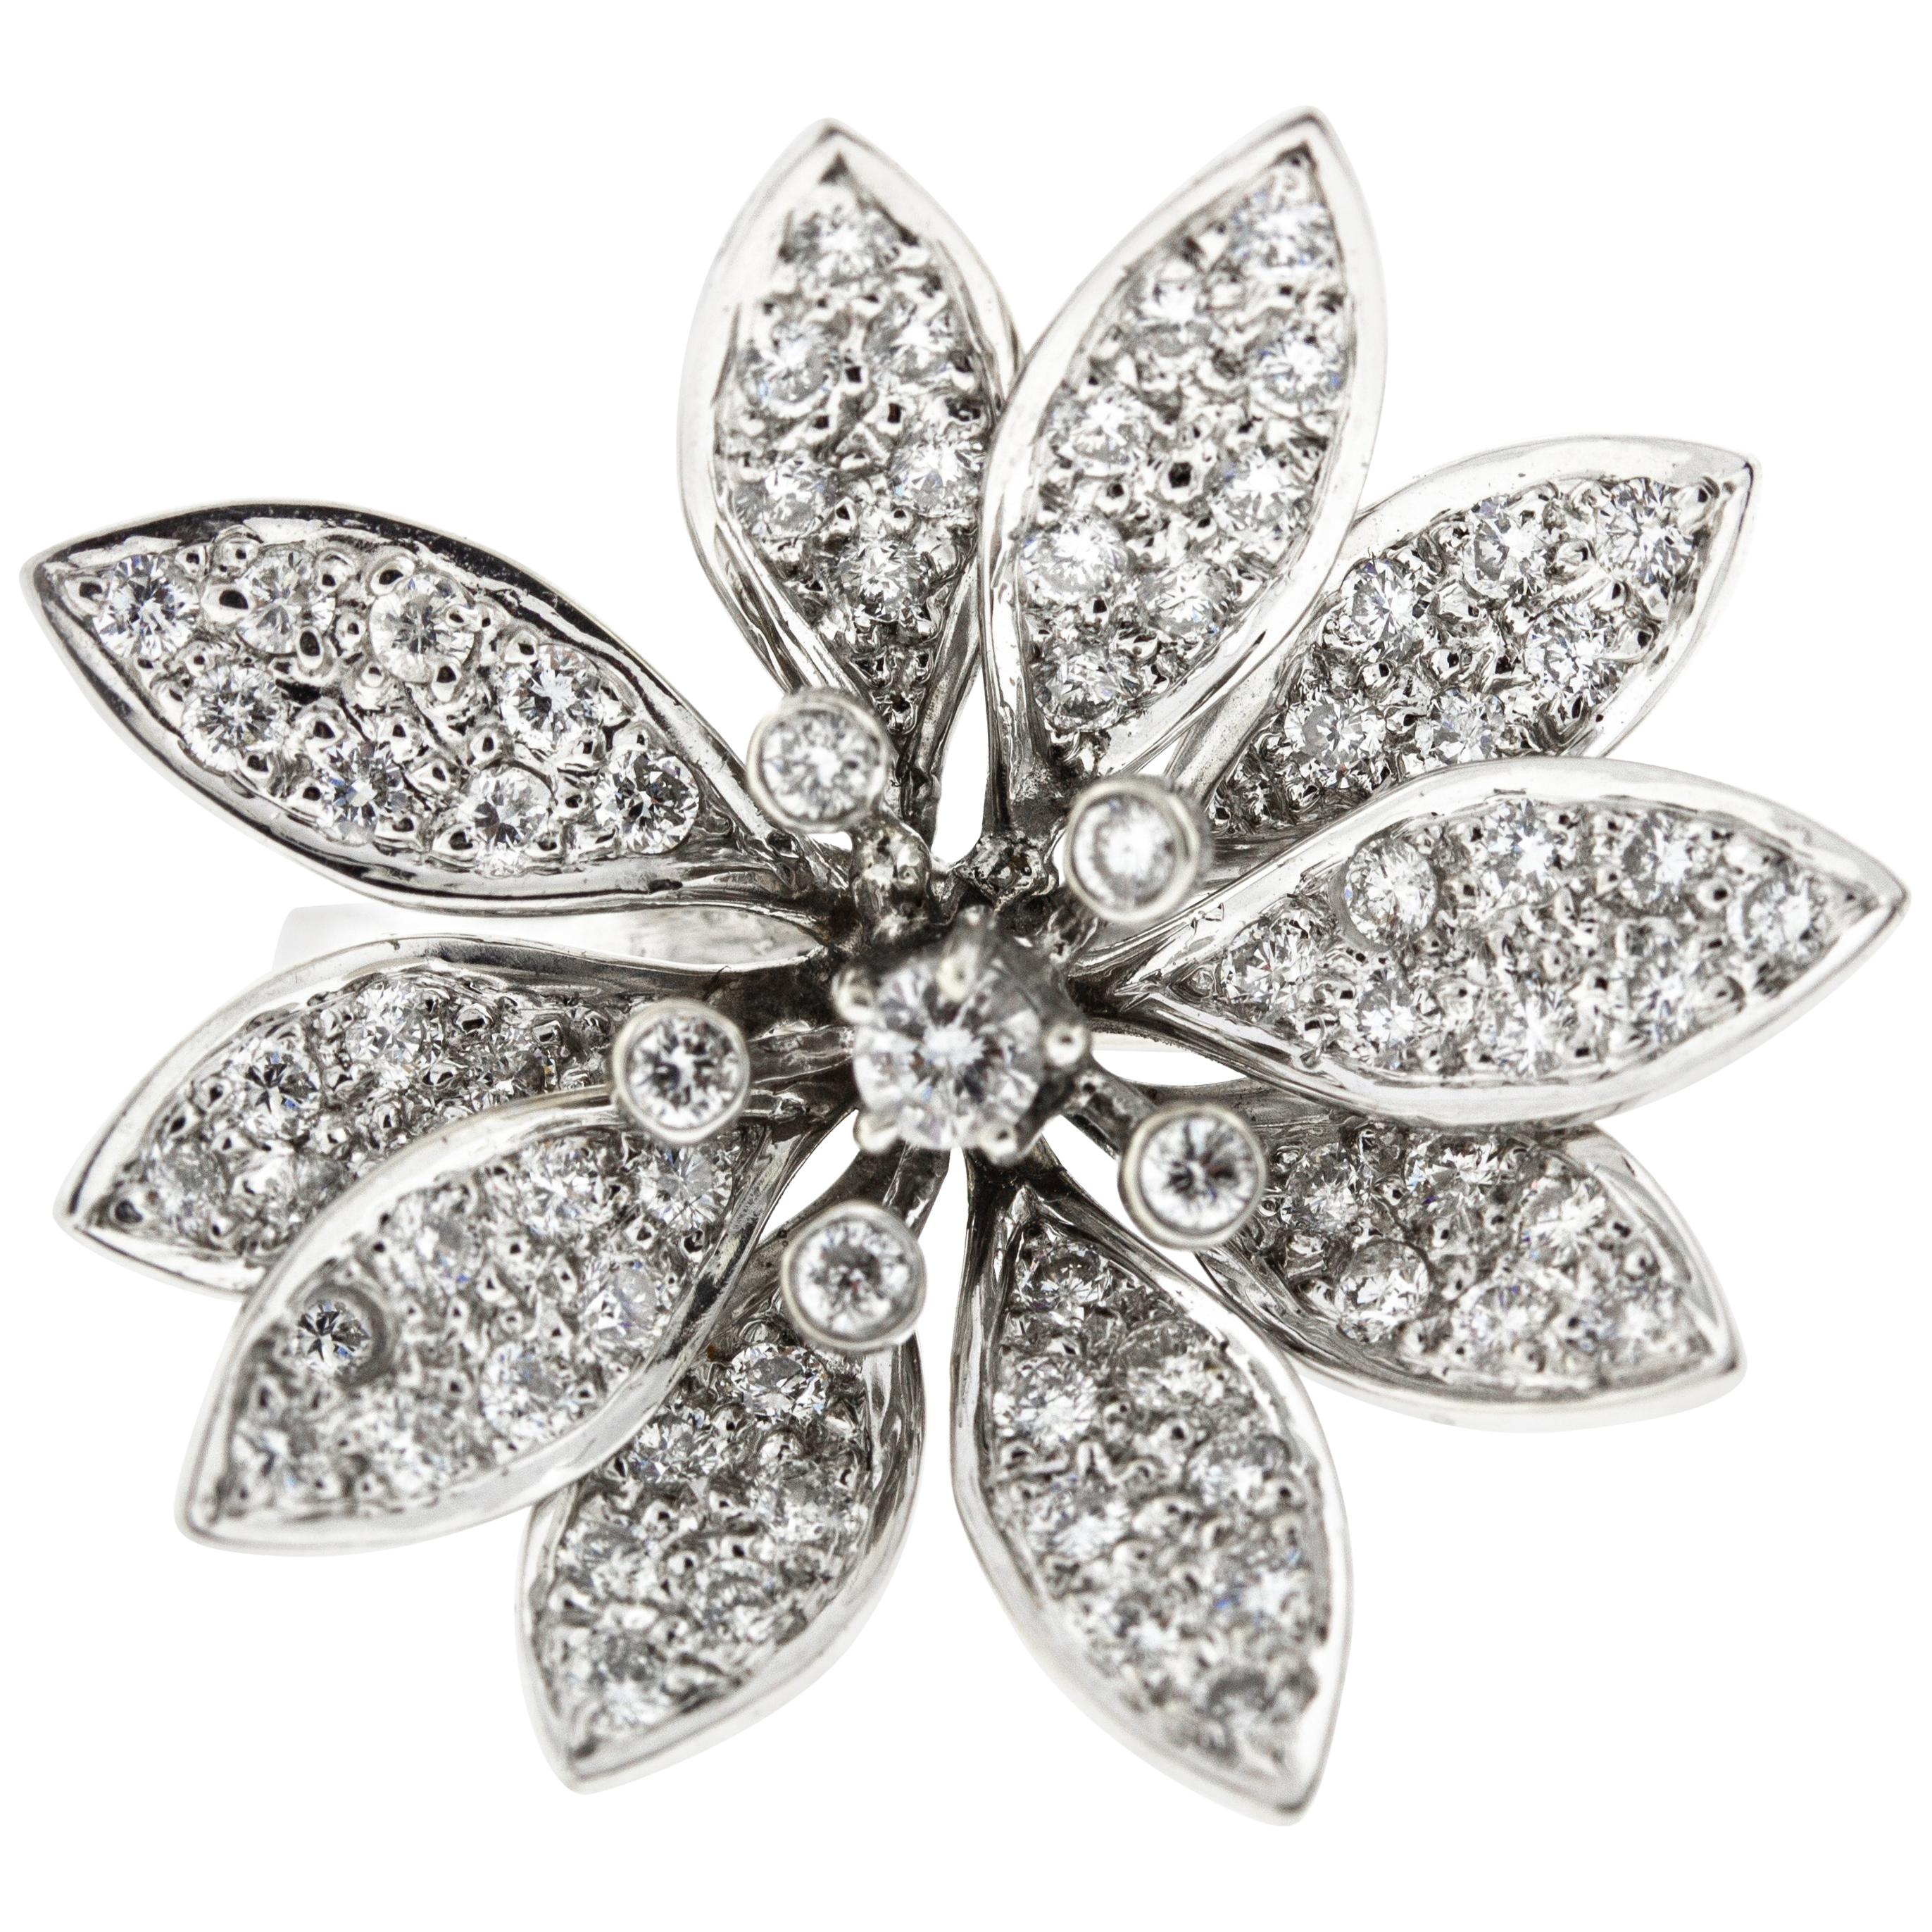 Vintage Floral Diamond Ring Set in White Gold